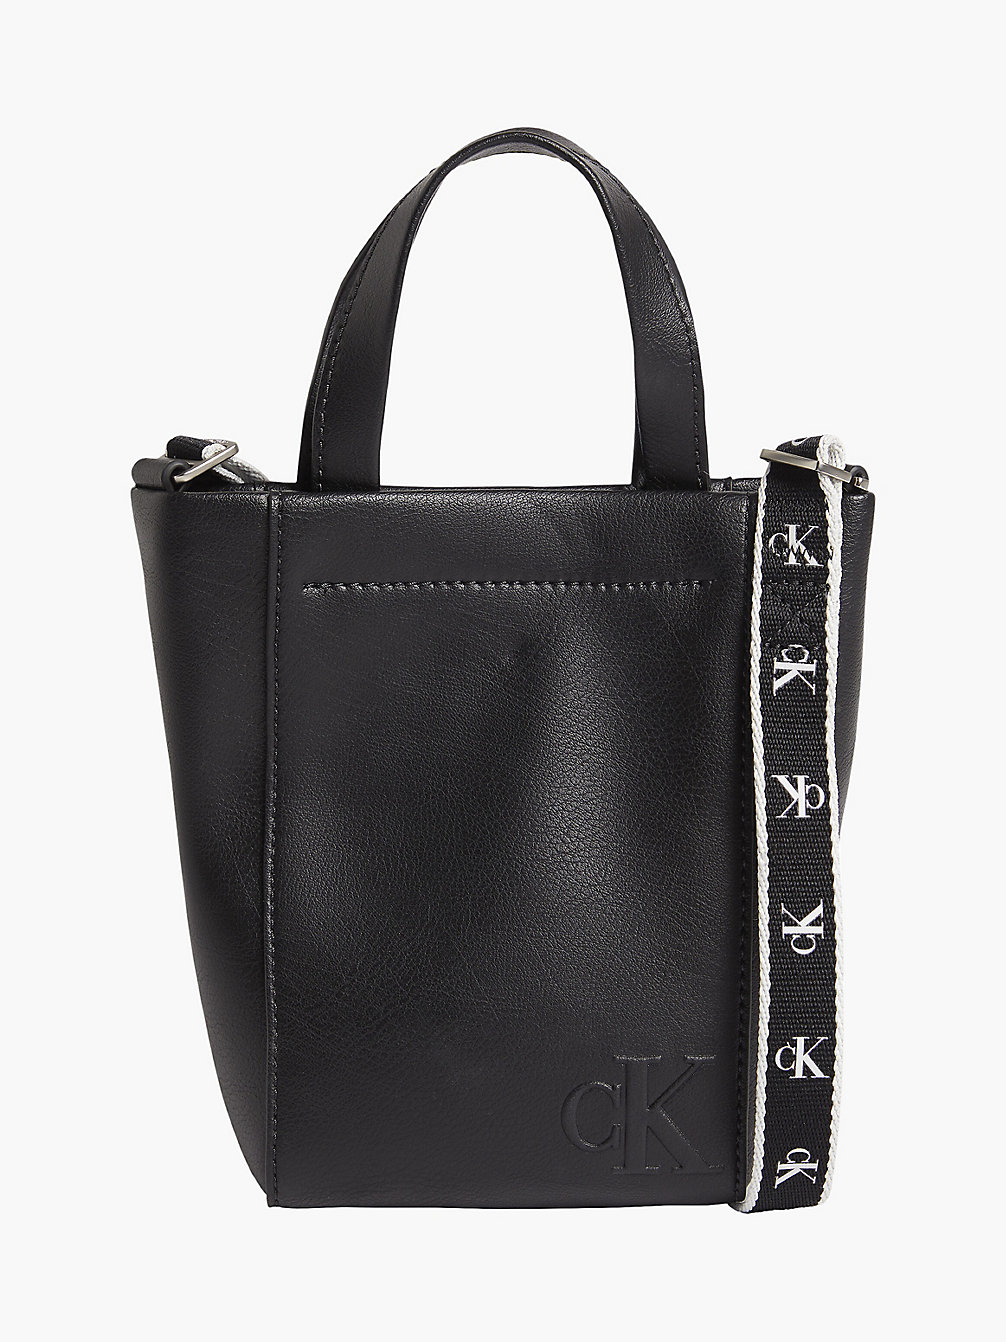 architect Diversiteit Klagen Bags for Women | Handbags, Tote Bags & More | Calvin Klein®